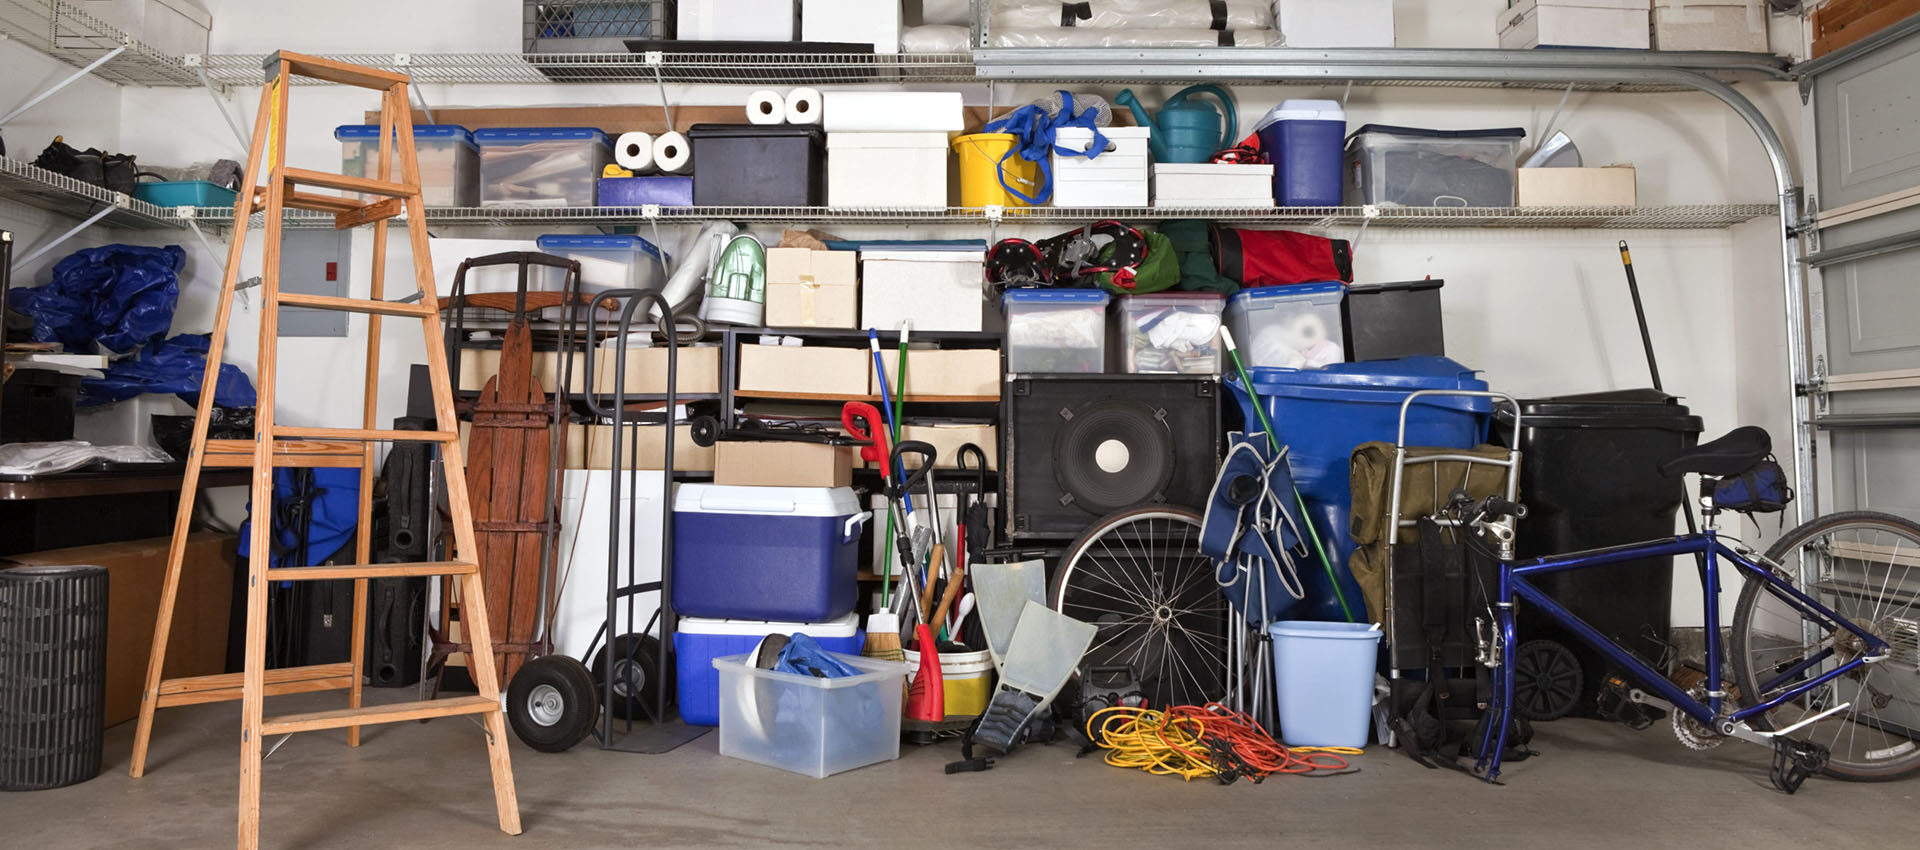 Top 5 Garage Organisation Tips to Reclaim Your Garage Space